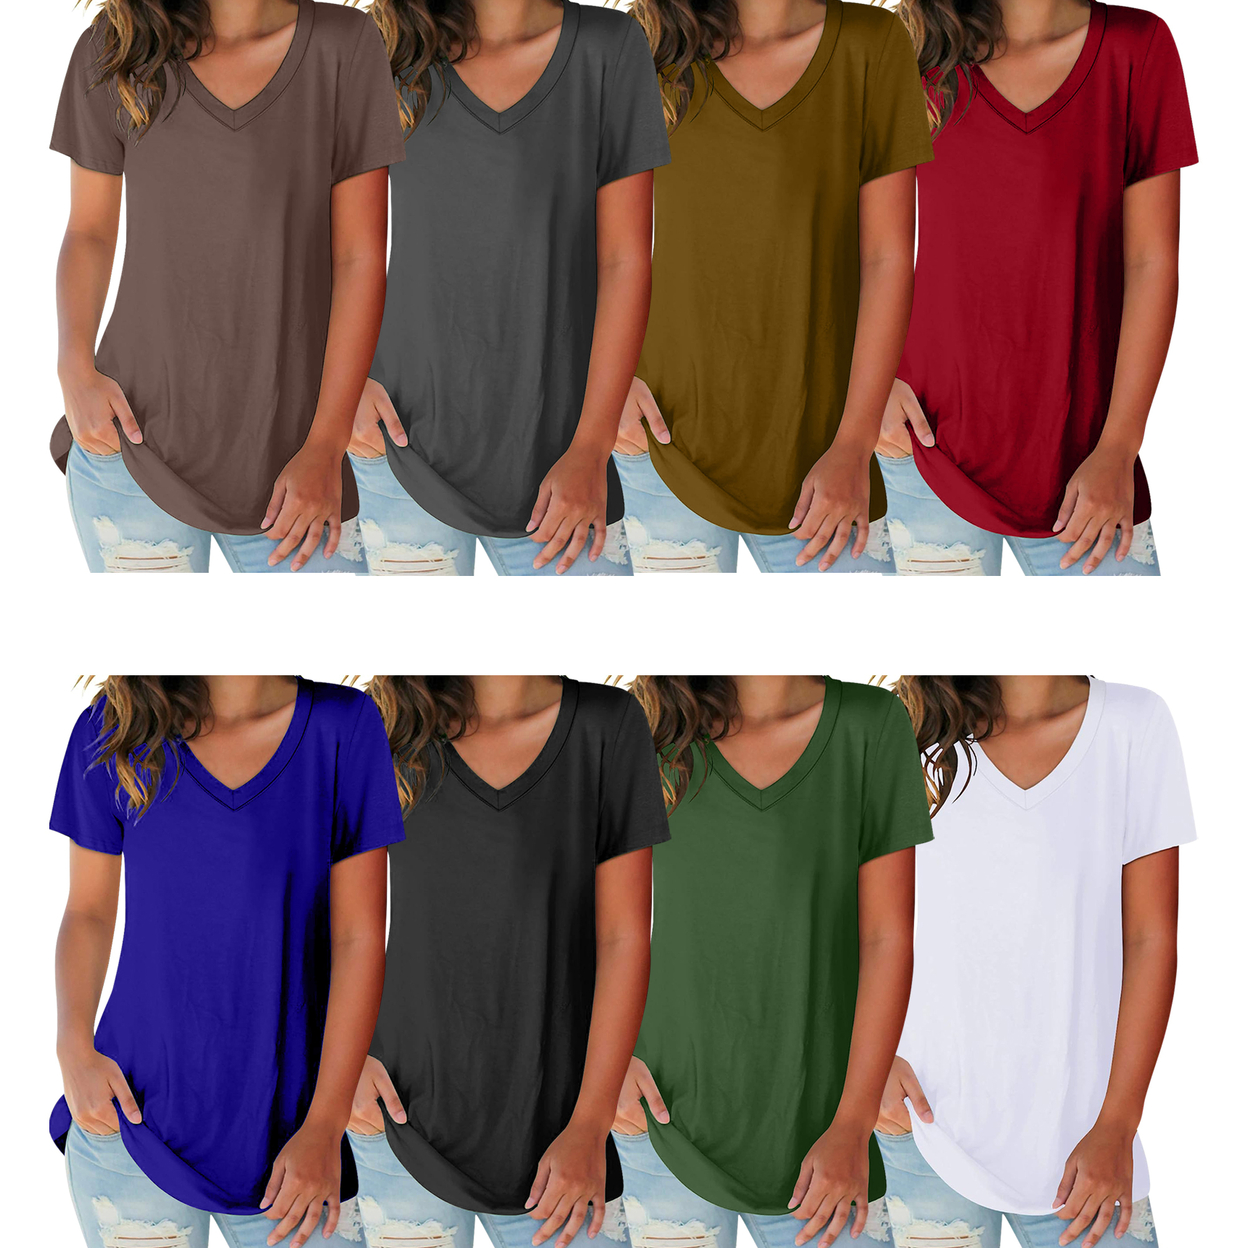 3-Pack: Women's Ultra Soft Smooth Cotton Blend Basic V-Neck Short Sleeve Shirts - Black, Navy, Brown, Medium